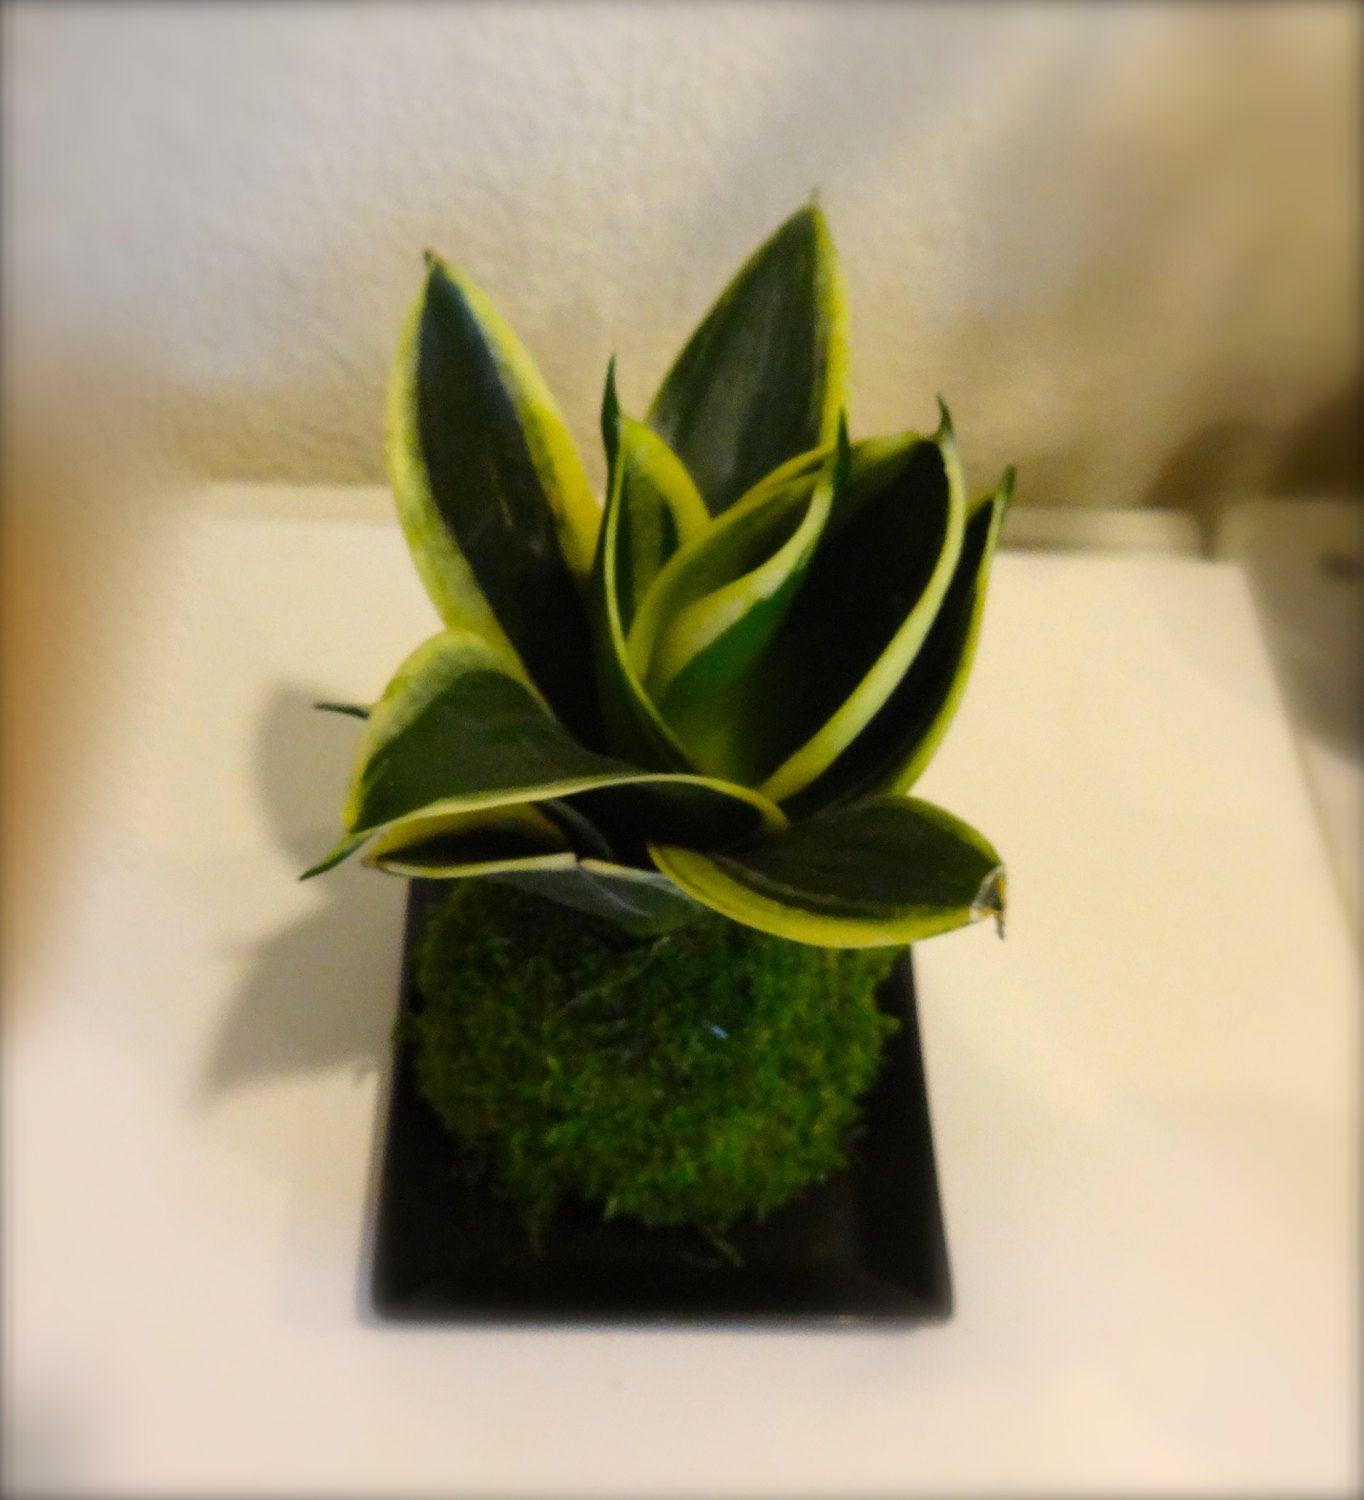 Sansevieria Kokedama - Best houseplant to improve indoor air quality. Drought tolerant plant!